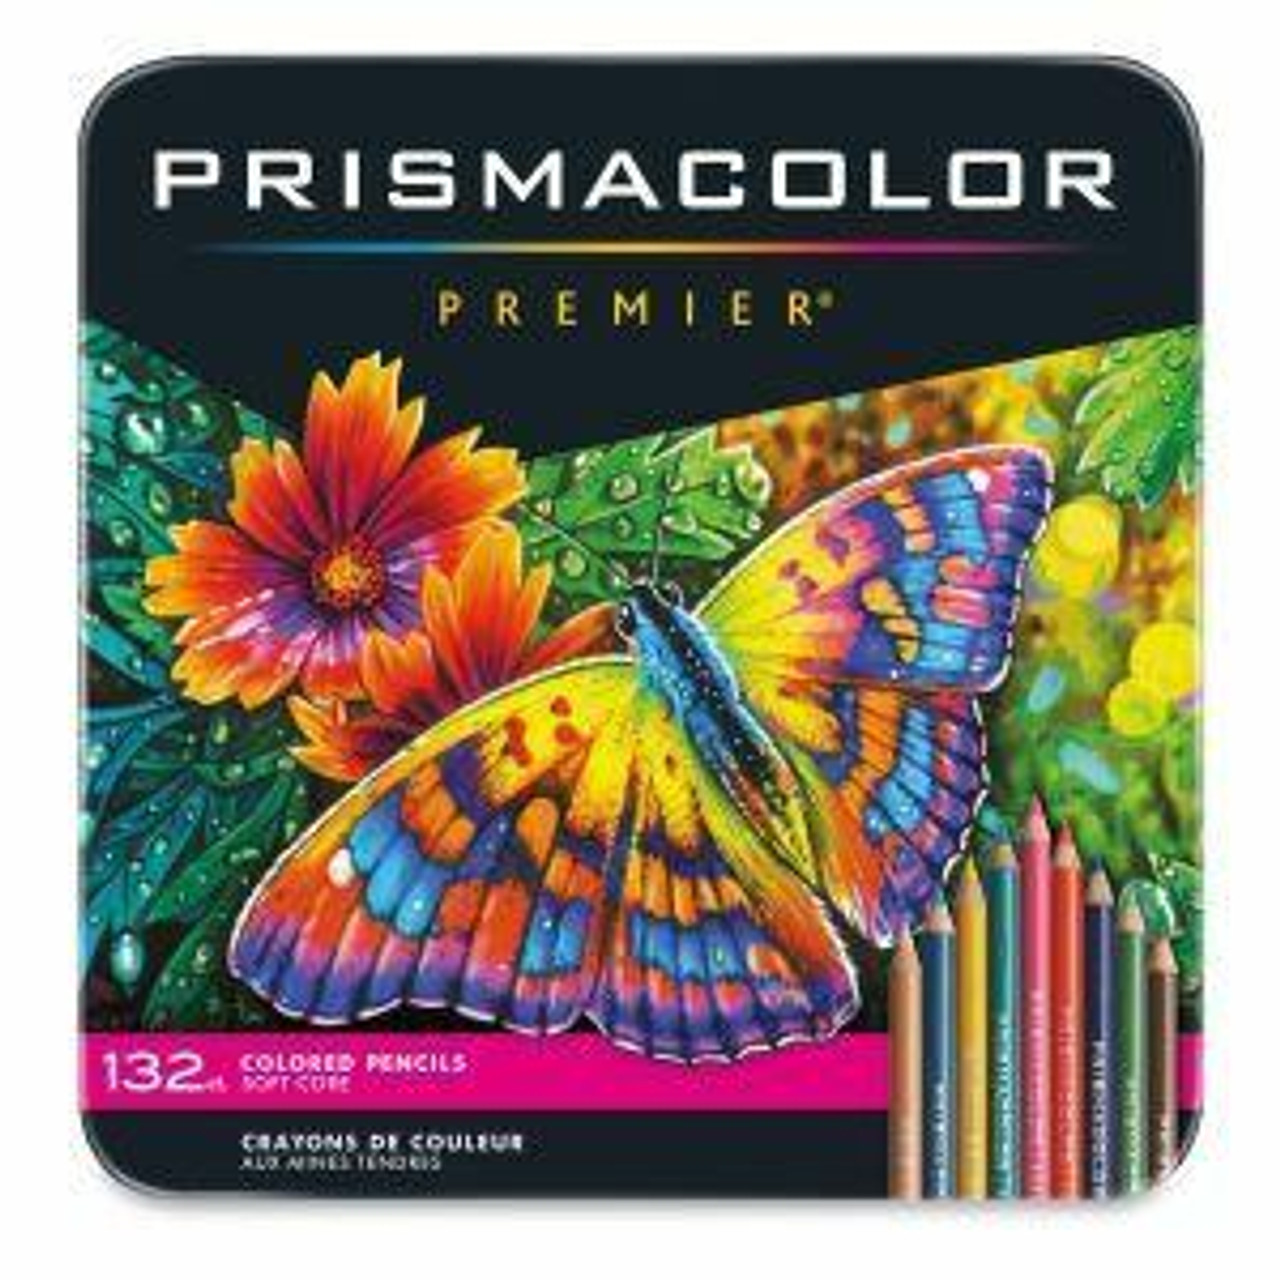 https://cdn11.bigcommerce.com/s-9uf88xhege/images/stencil/1280x1280/products/9316/26734/prismacolor-premier-thick-core-colored-pencil-set-132-color-set__59450.1649574625.jpg?c=1?imbypass=on